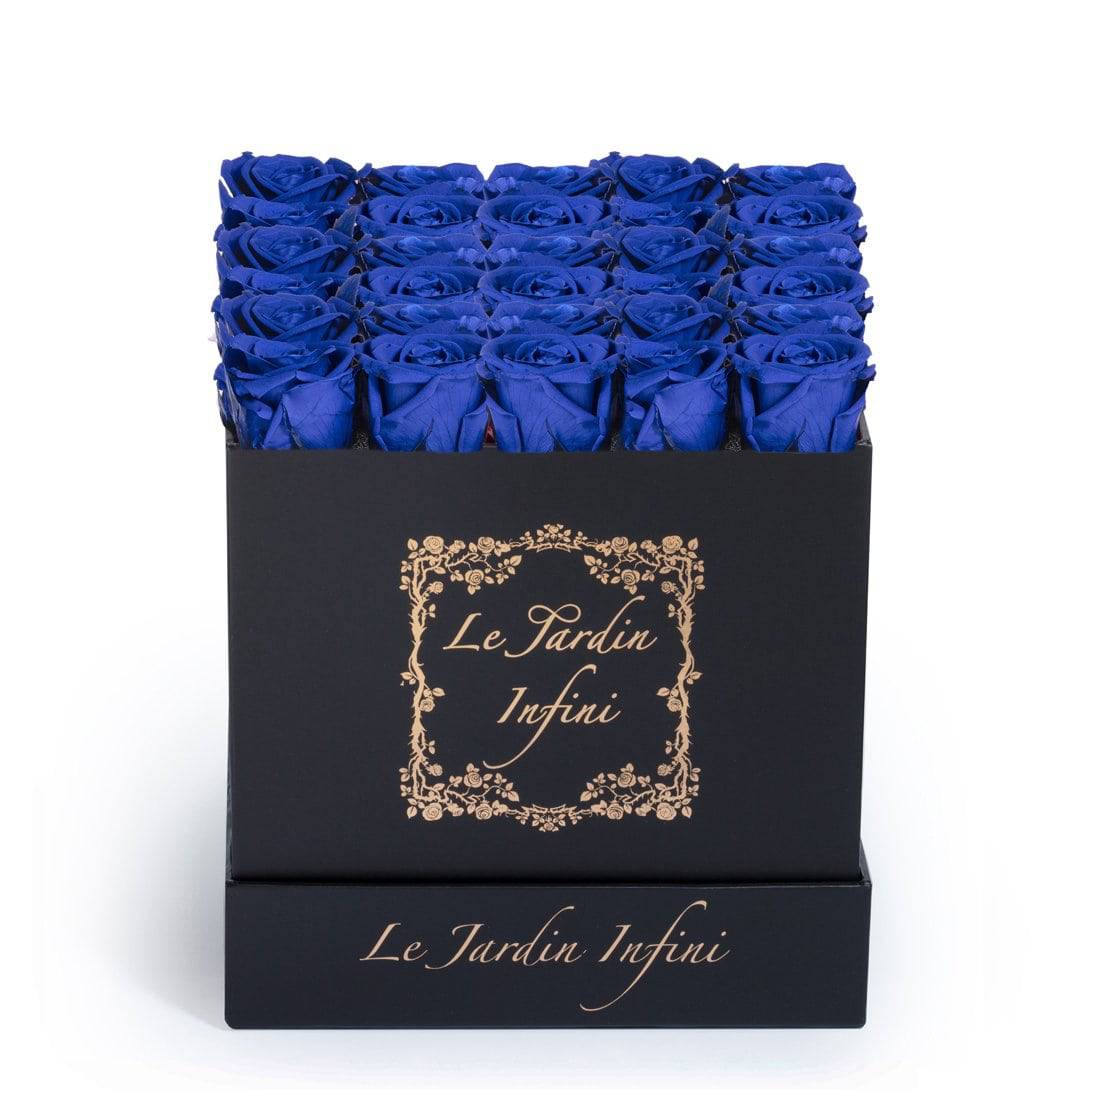 Royal Blue Preserved Roses - Medium Square Black Box - Le Jardin Infini Roses in a Box